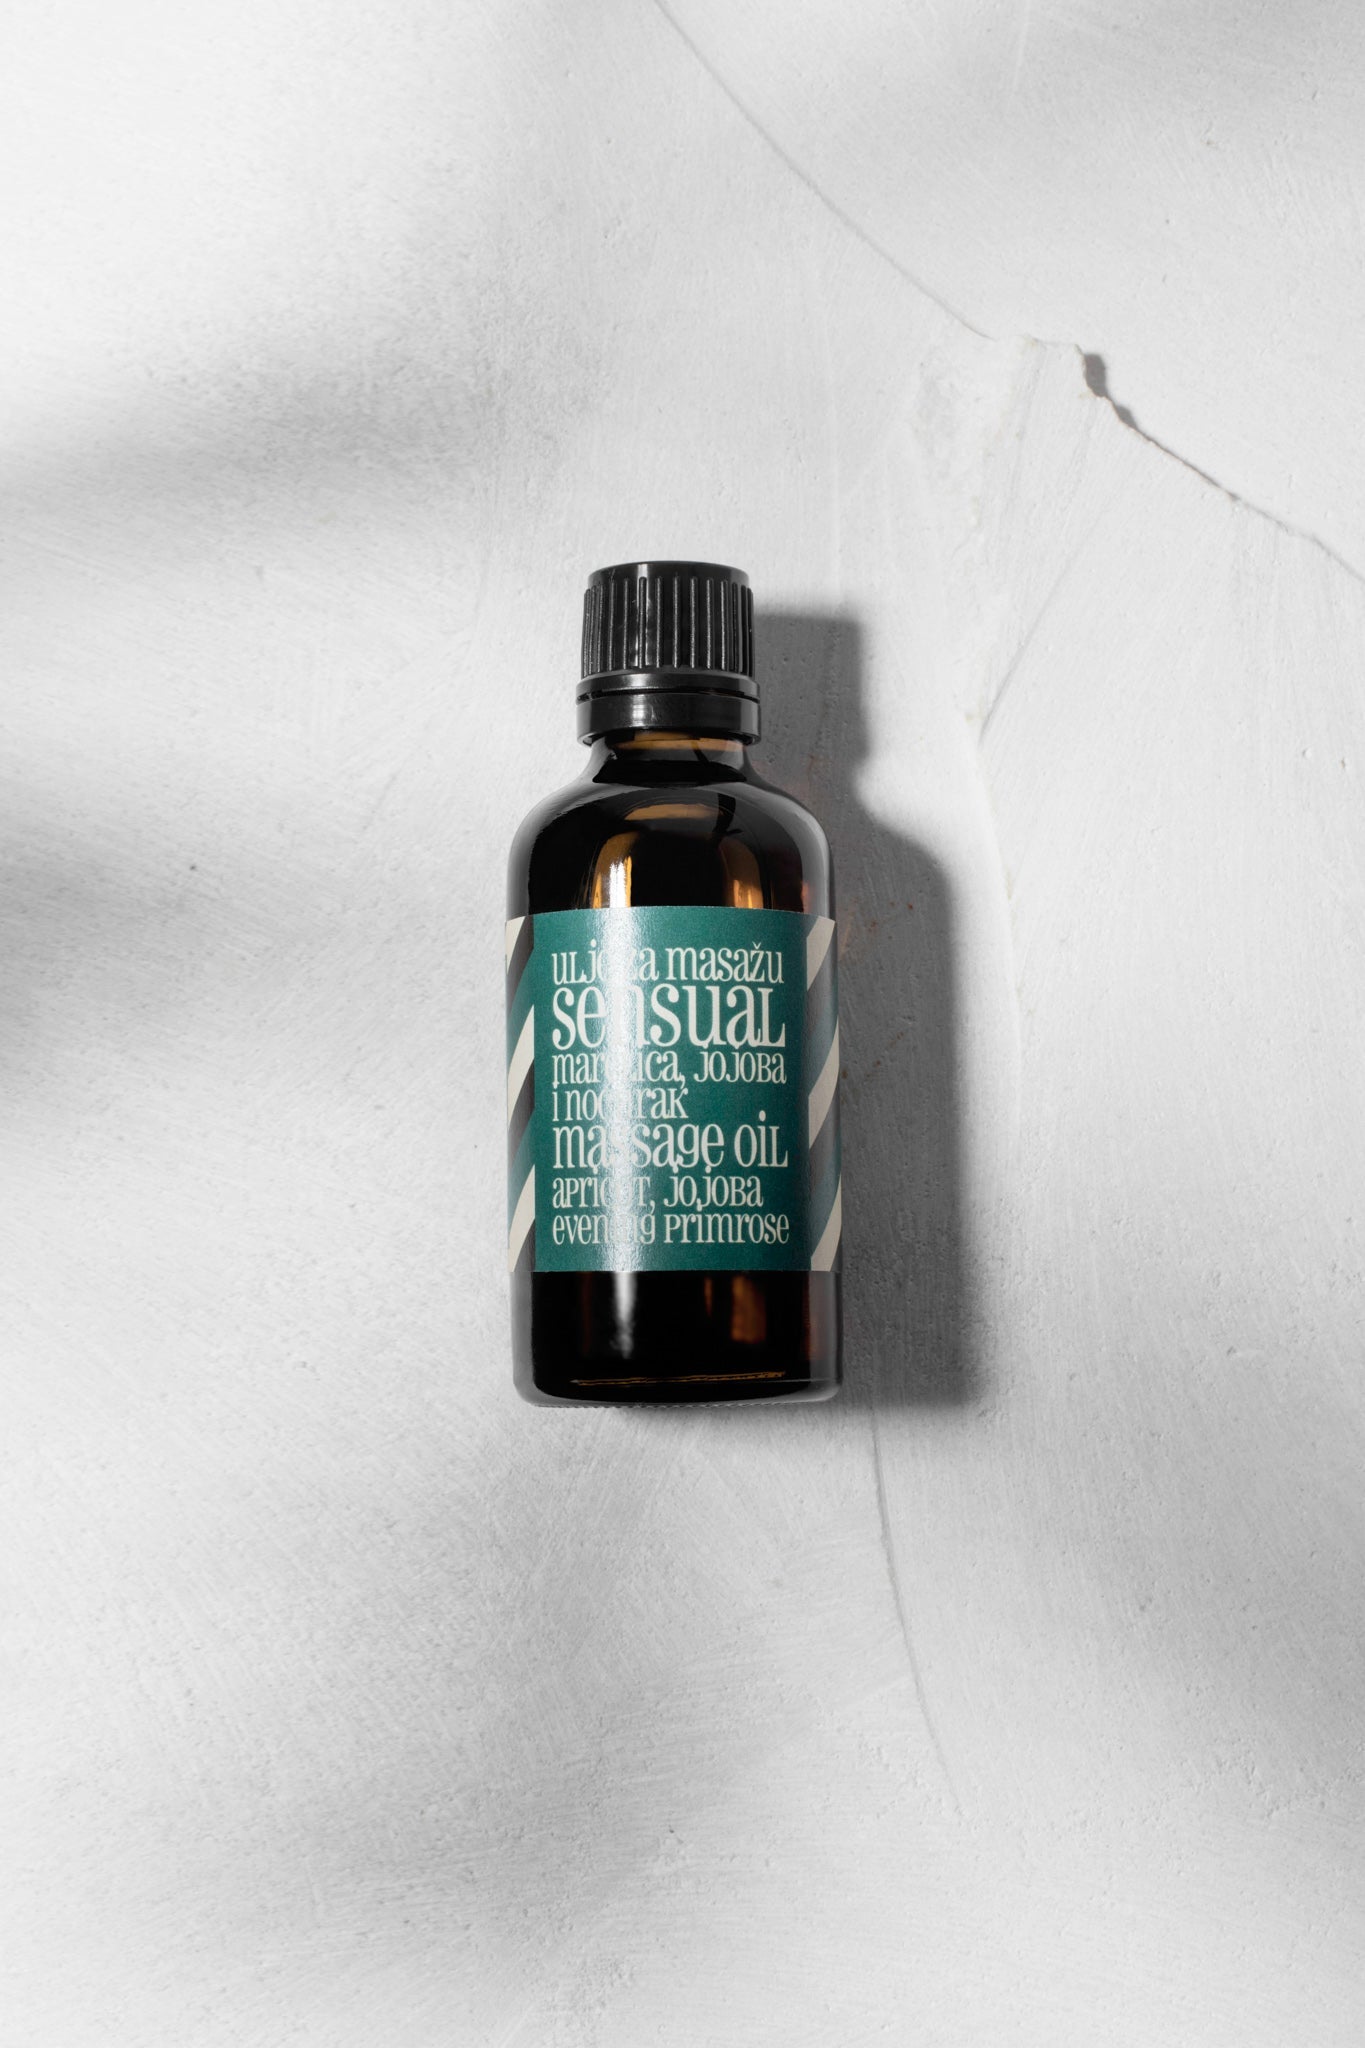 Massage oil "Sensual" [apricot kernel and jojoba oils]